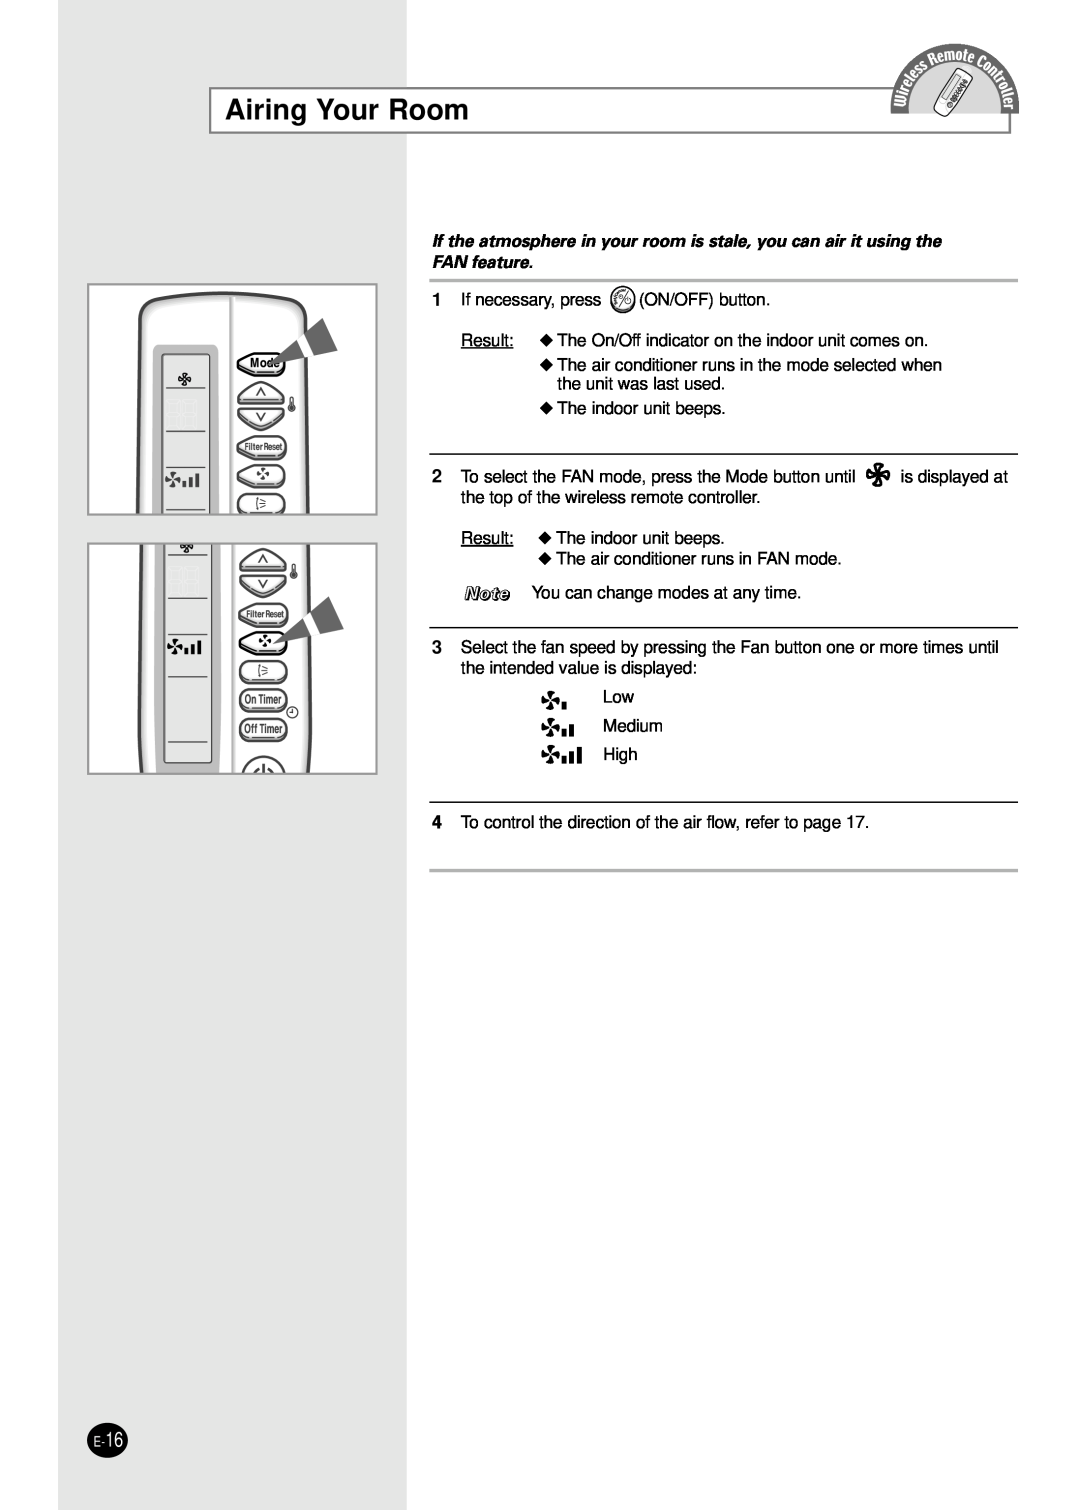 Samsung AFPCC052CA0 manuel dutilisation Airing Your Room, FAN feature 